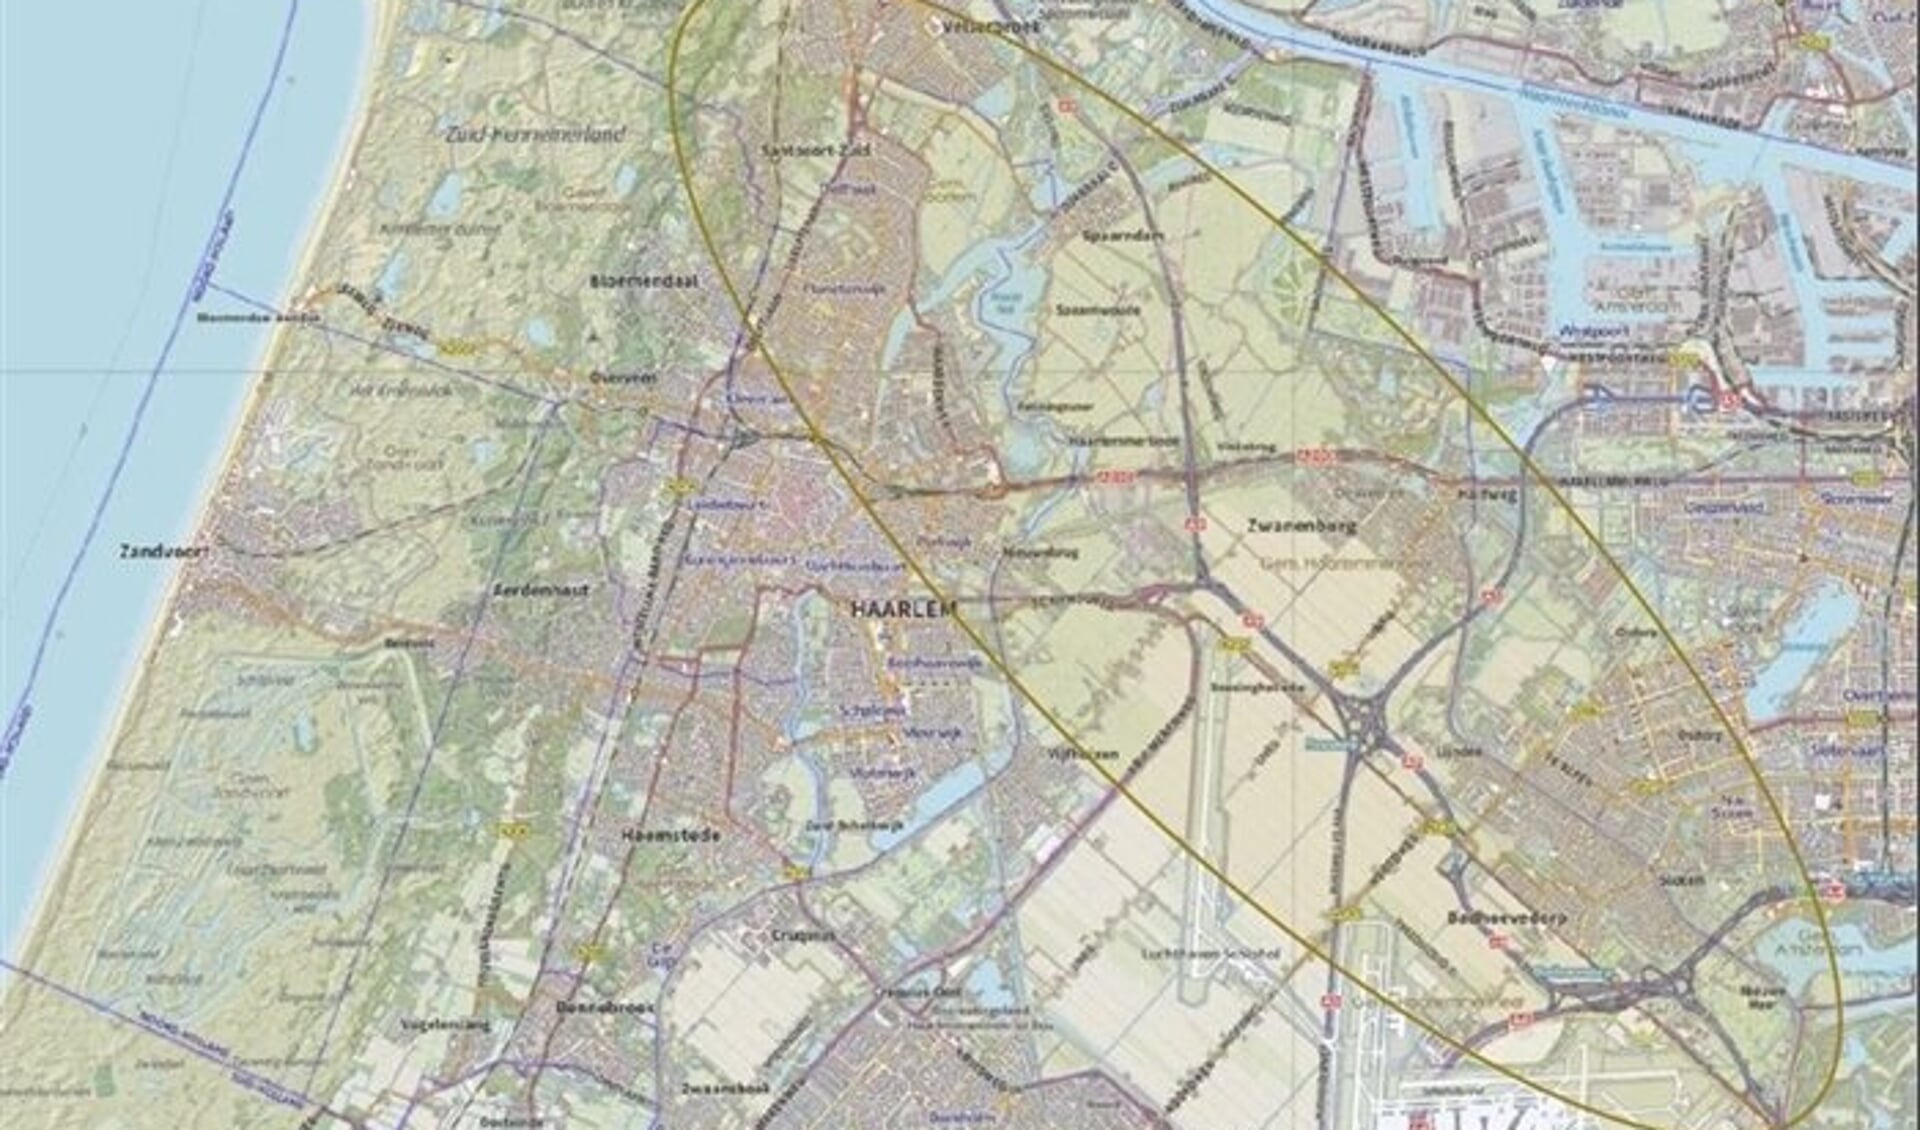 Het zoekgebied ligt tussen Haarlem en Amsterdam-West.